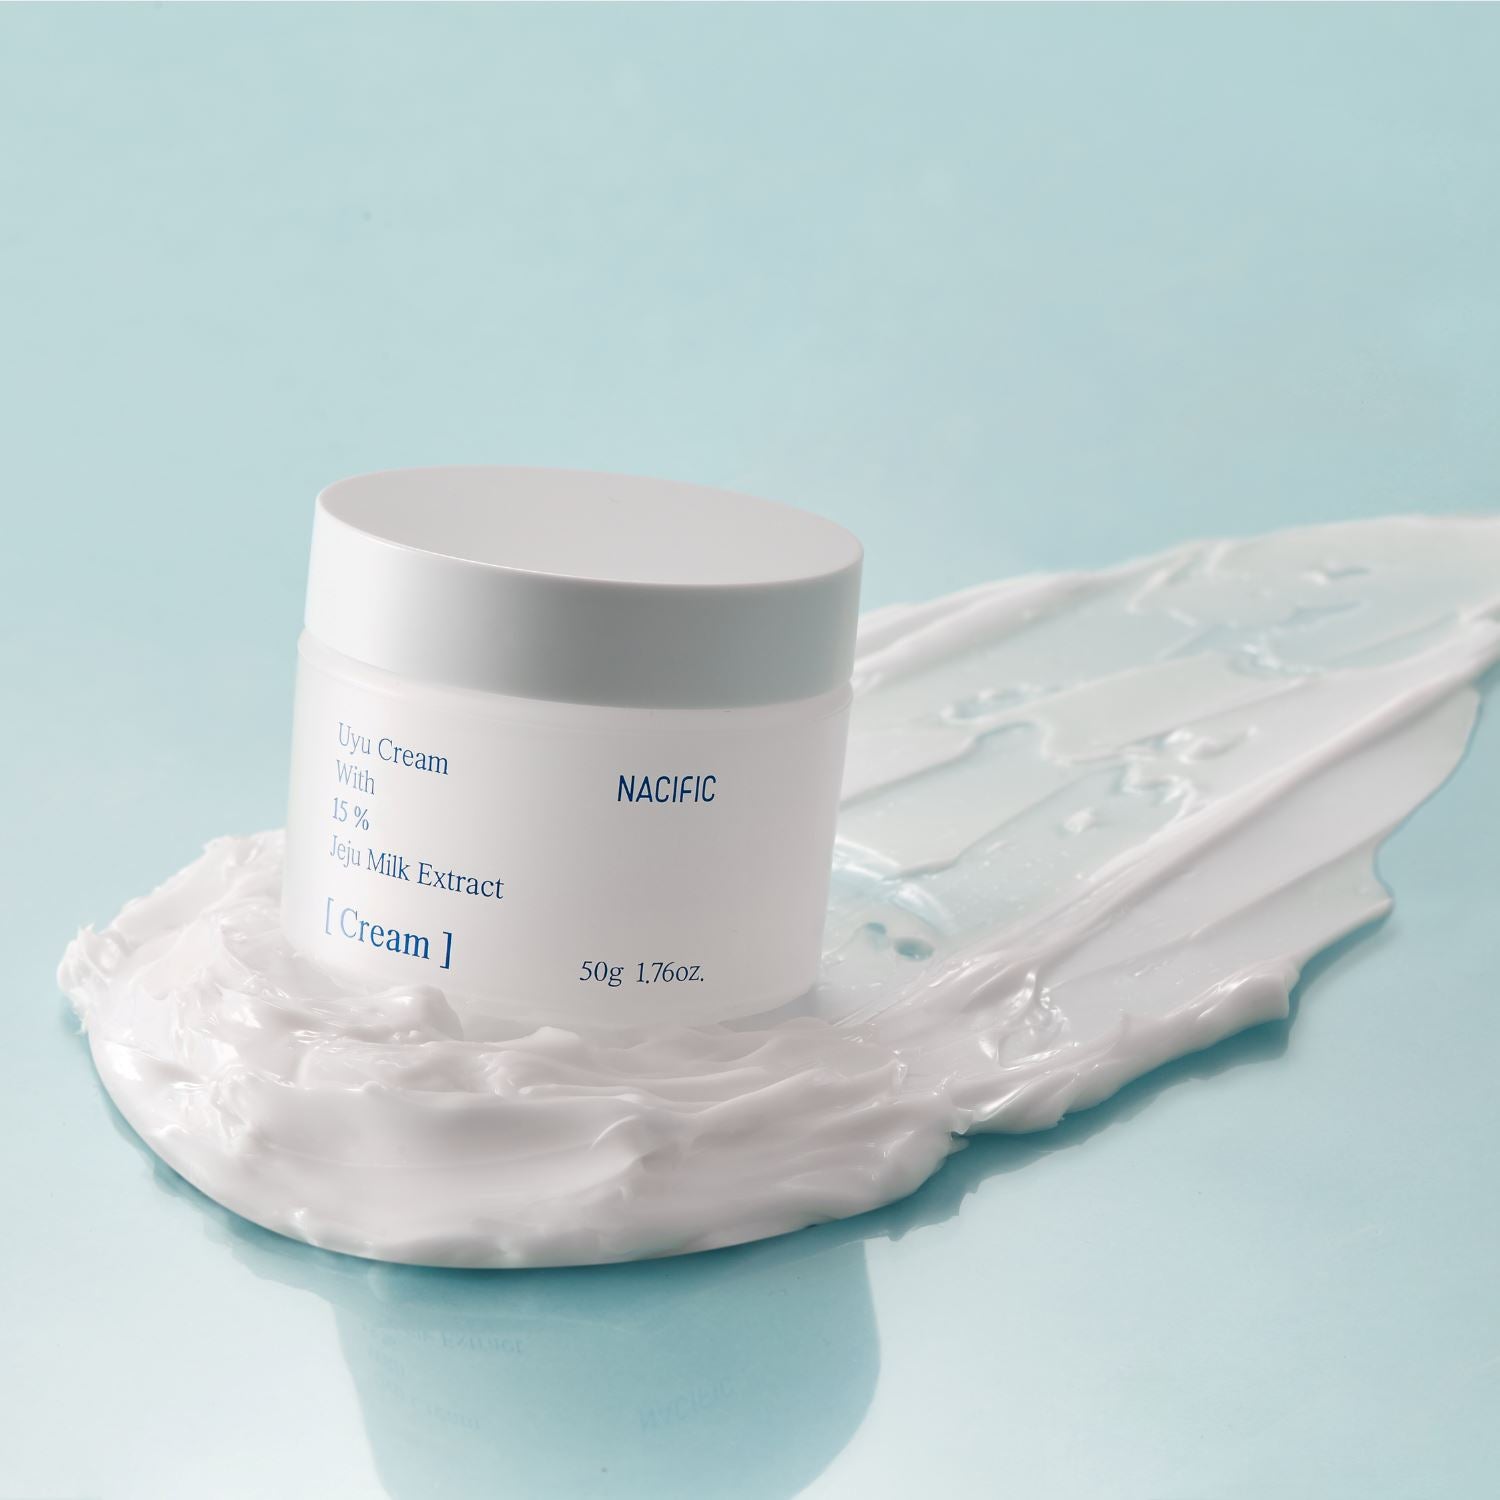 Nacific Uyu Cream + Ampoule with 15% Jeju Milk Set Skin Care Nacific ORION XO Sri Lanka